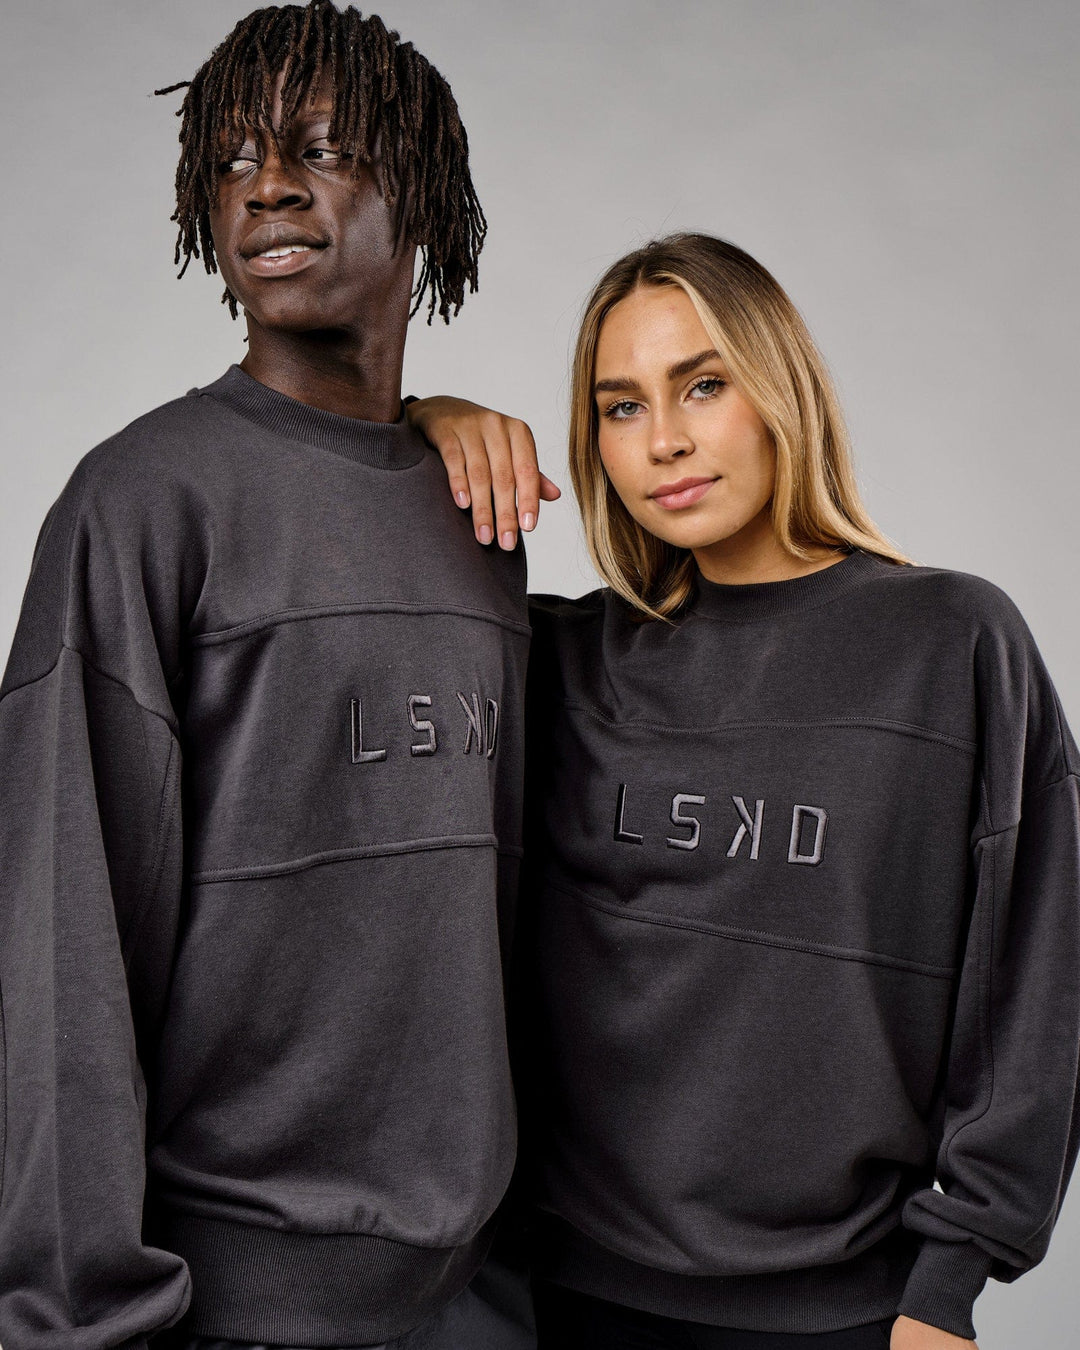 Duo wearing Unisex Slice Sweater Oversize - Phantom